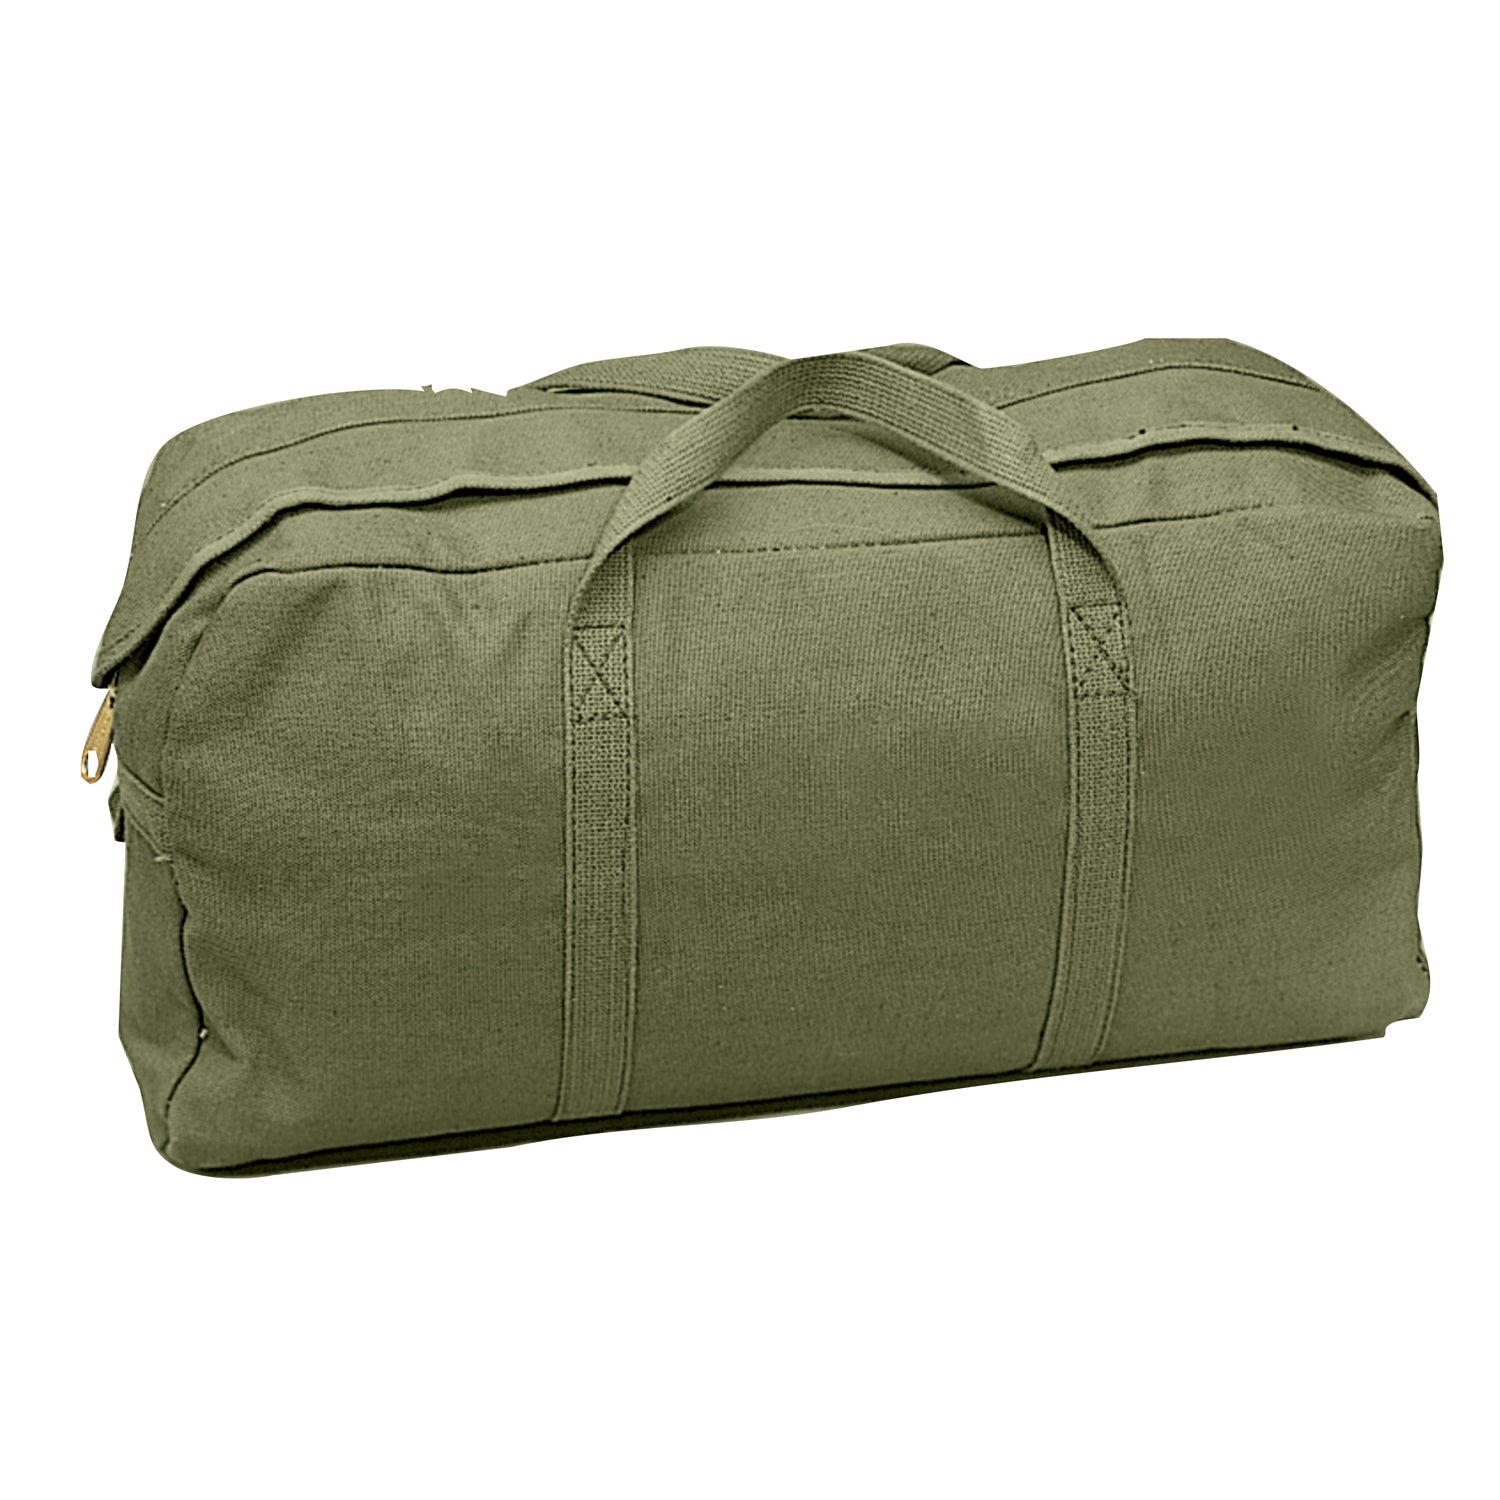 Rothco Canvas Tanker Tool Duffle Bag Olive Drab (8182)